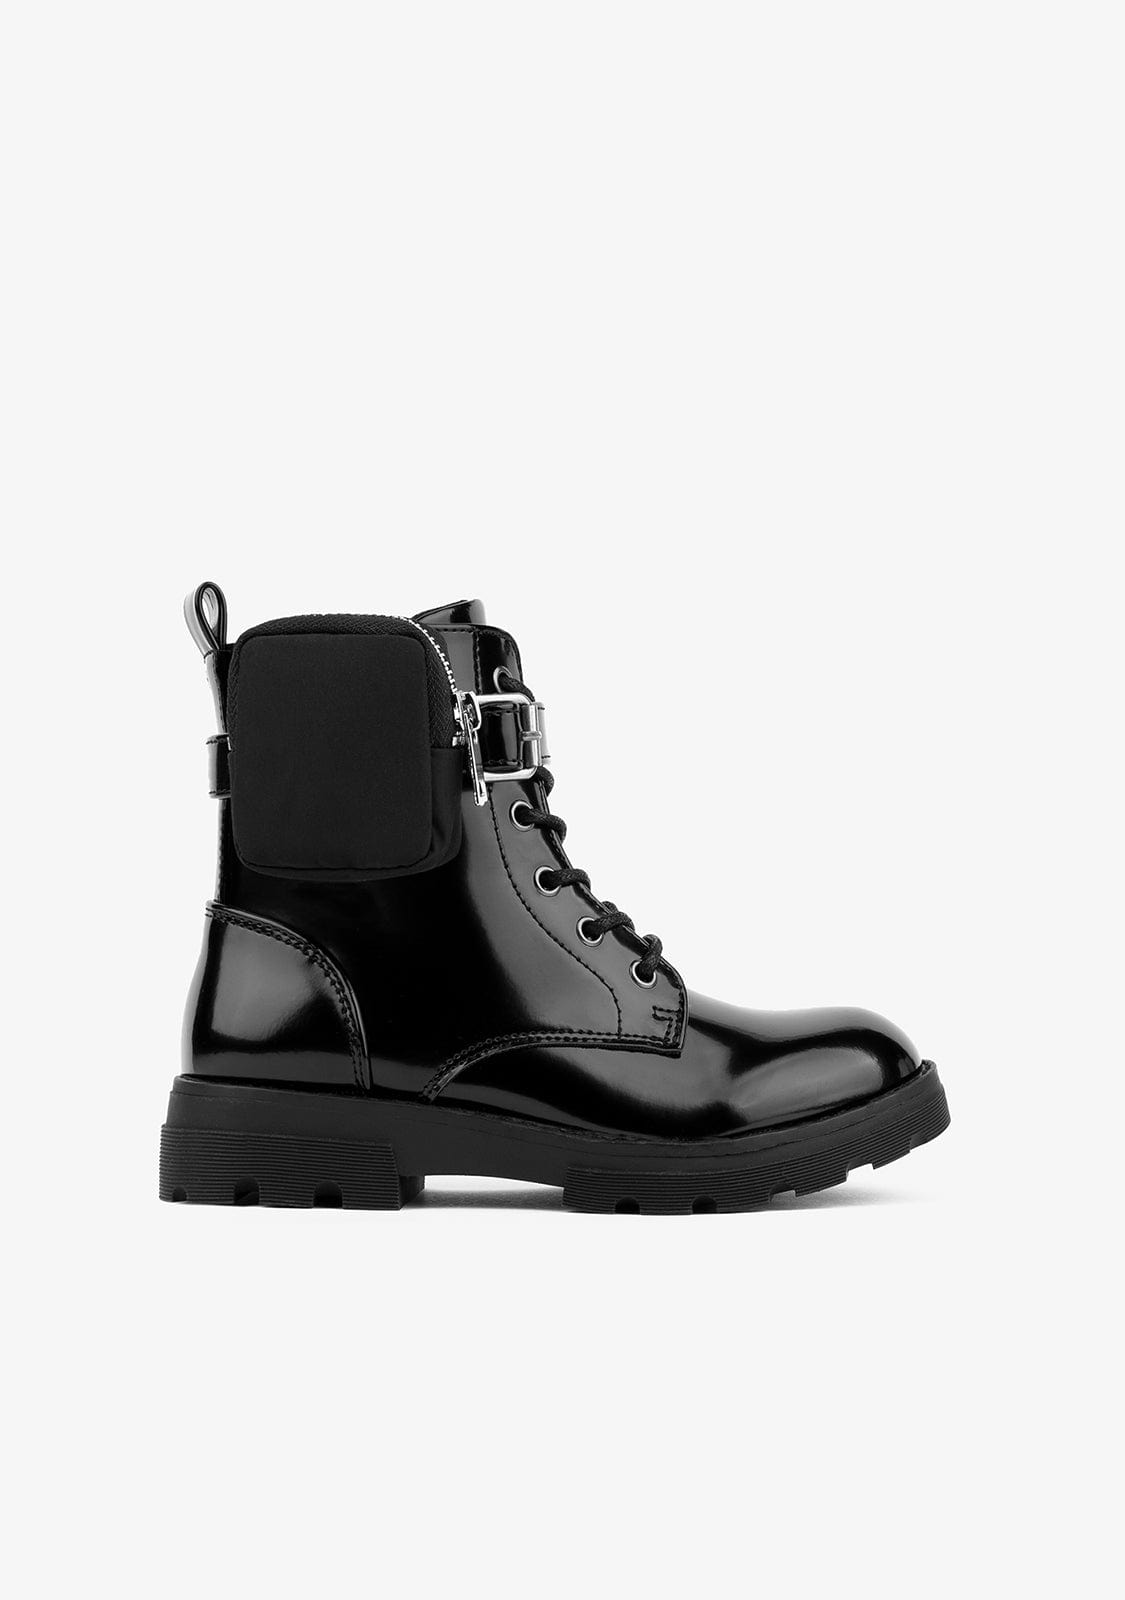 B&W JUNIOR Shoes Black Mini Pocket Combat Boots Antik